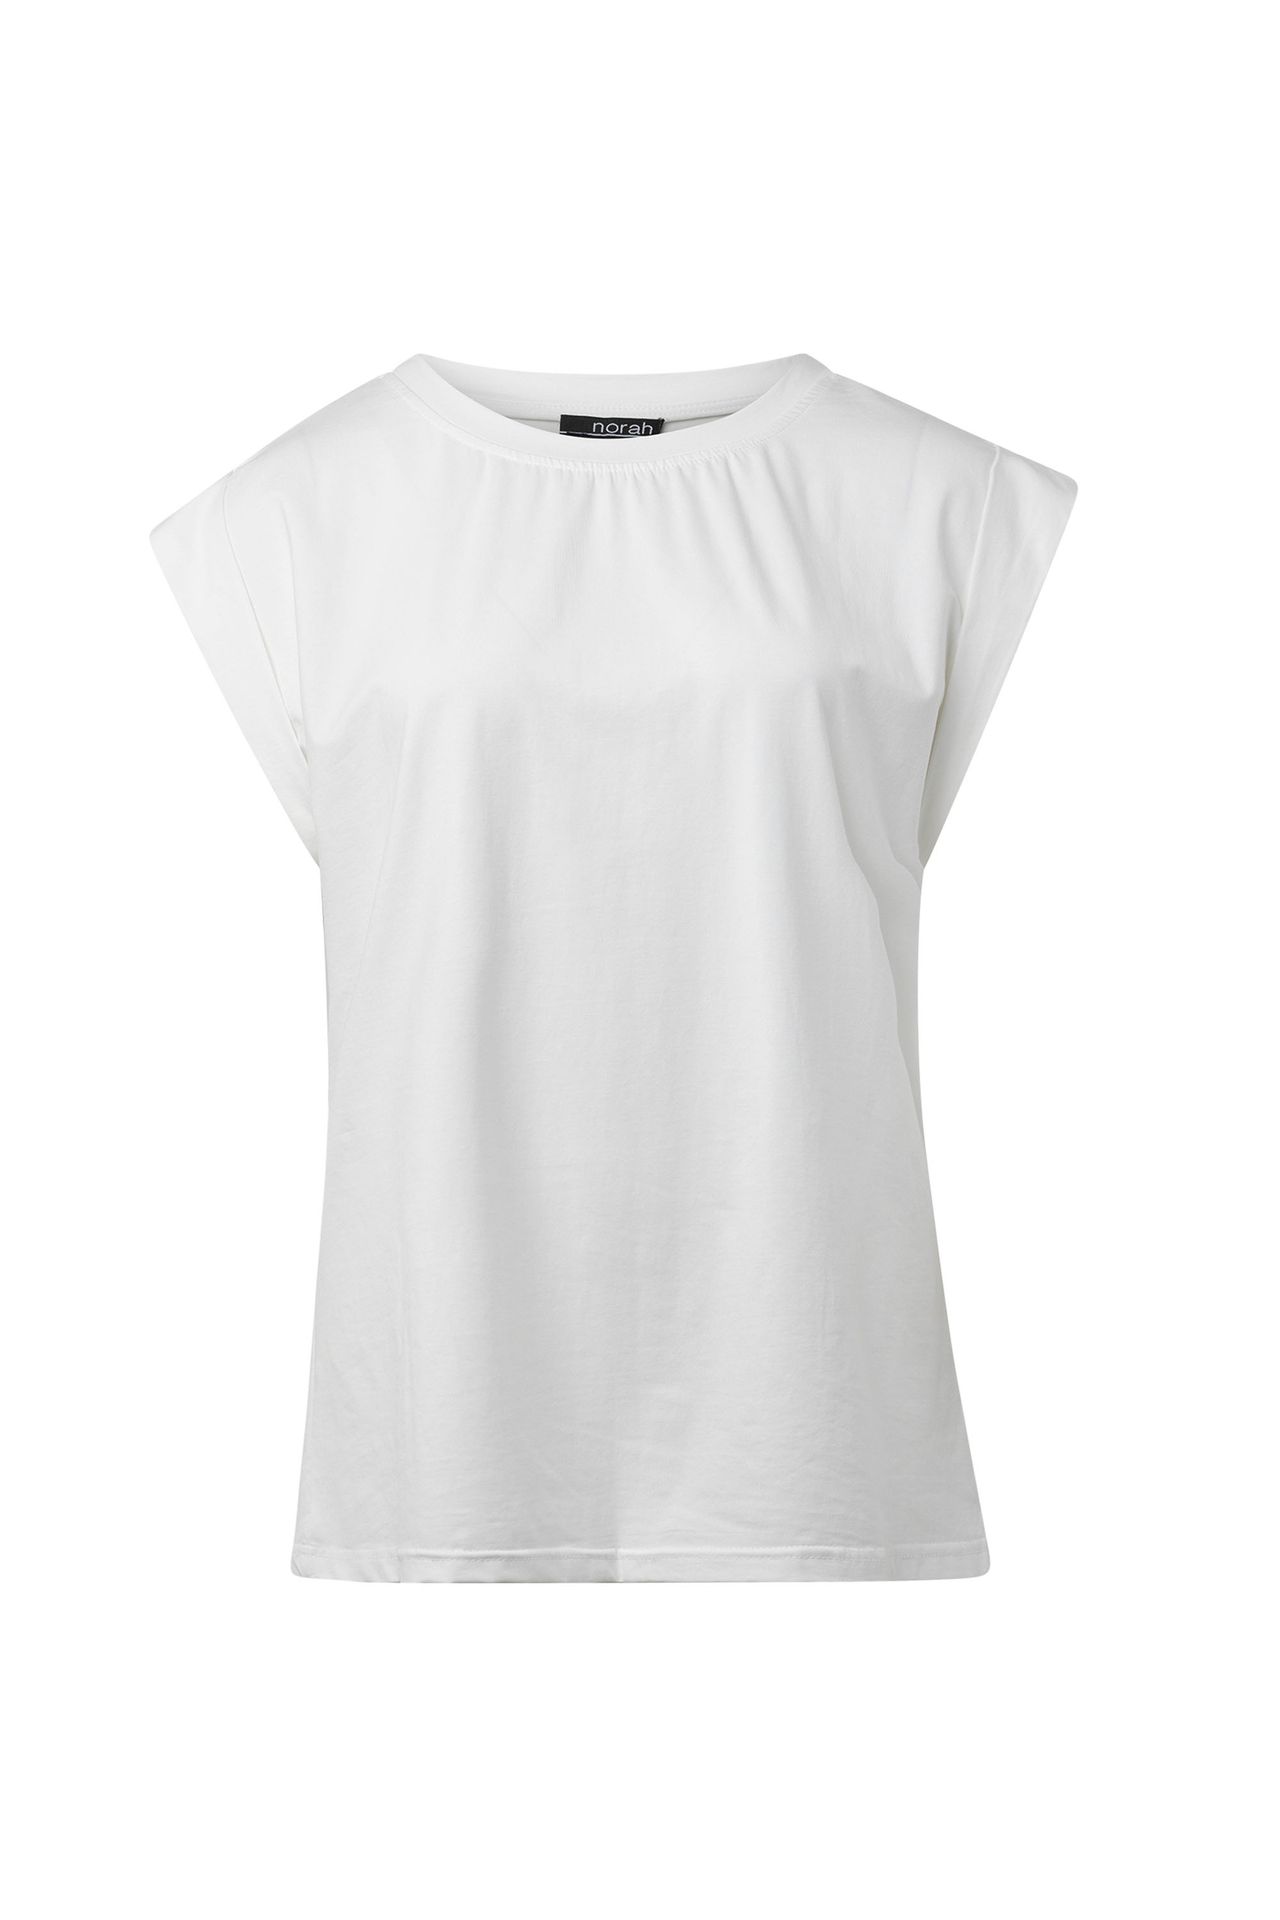 Norah Off white shirt off-white 214775-101